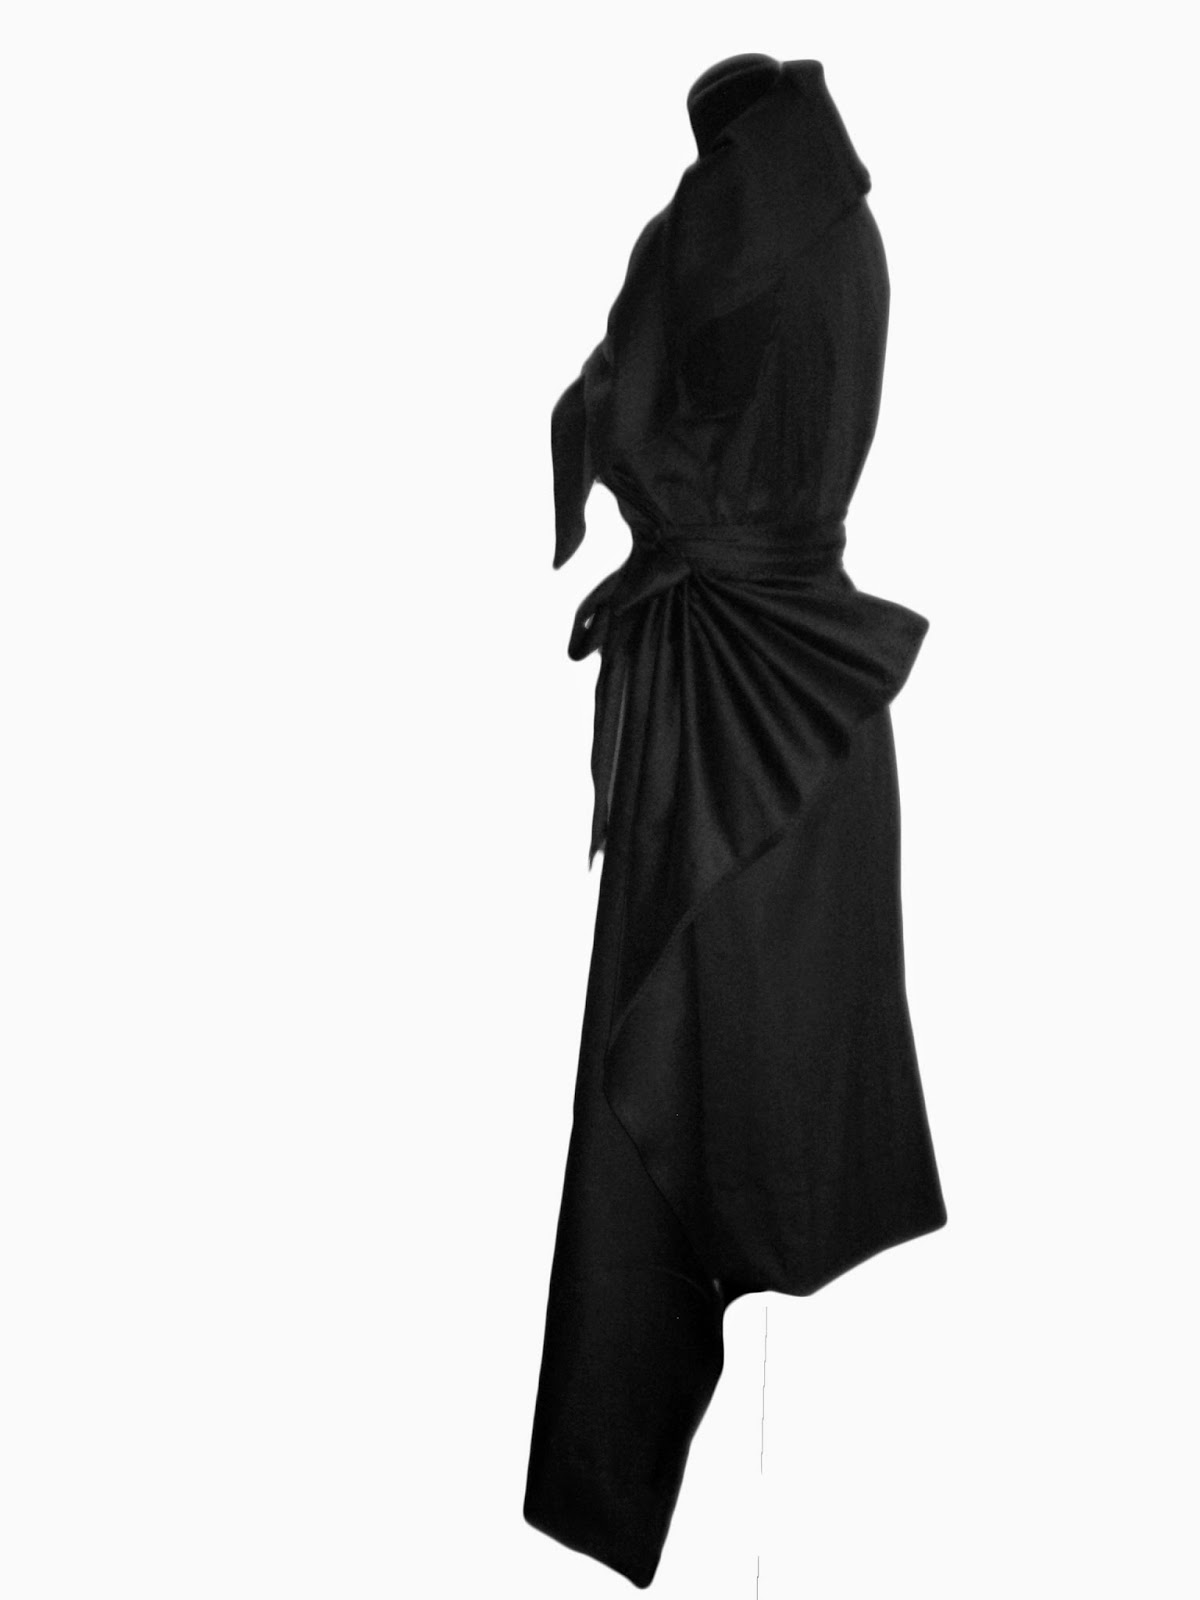 blog DD: unusual draped black dress or tunic